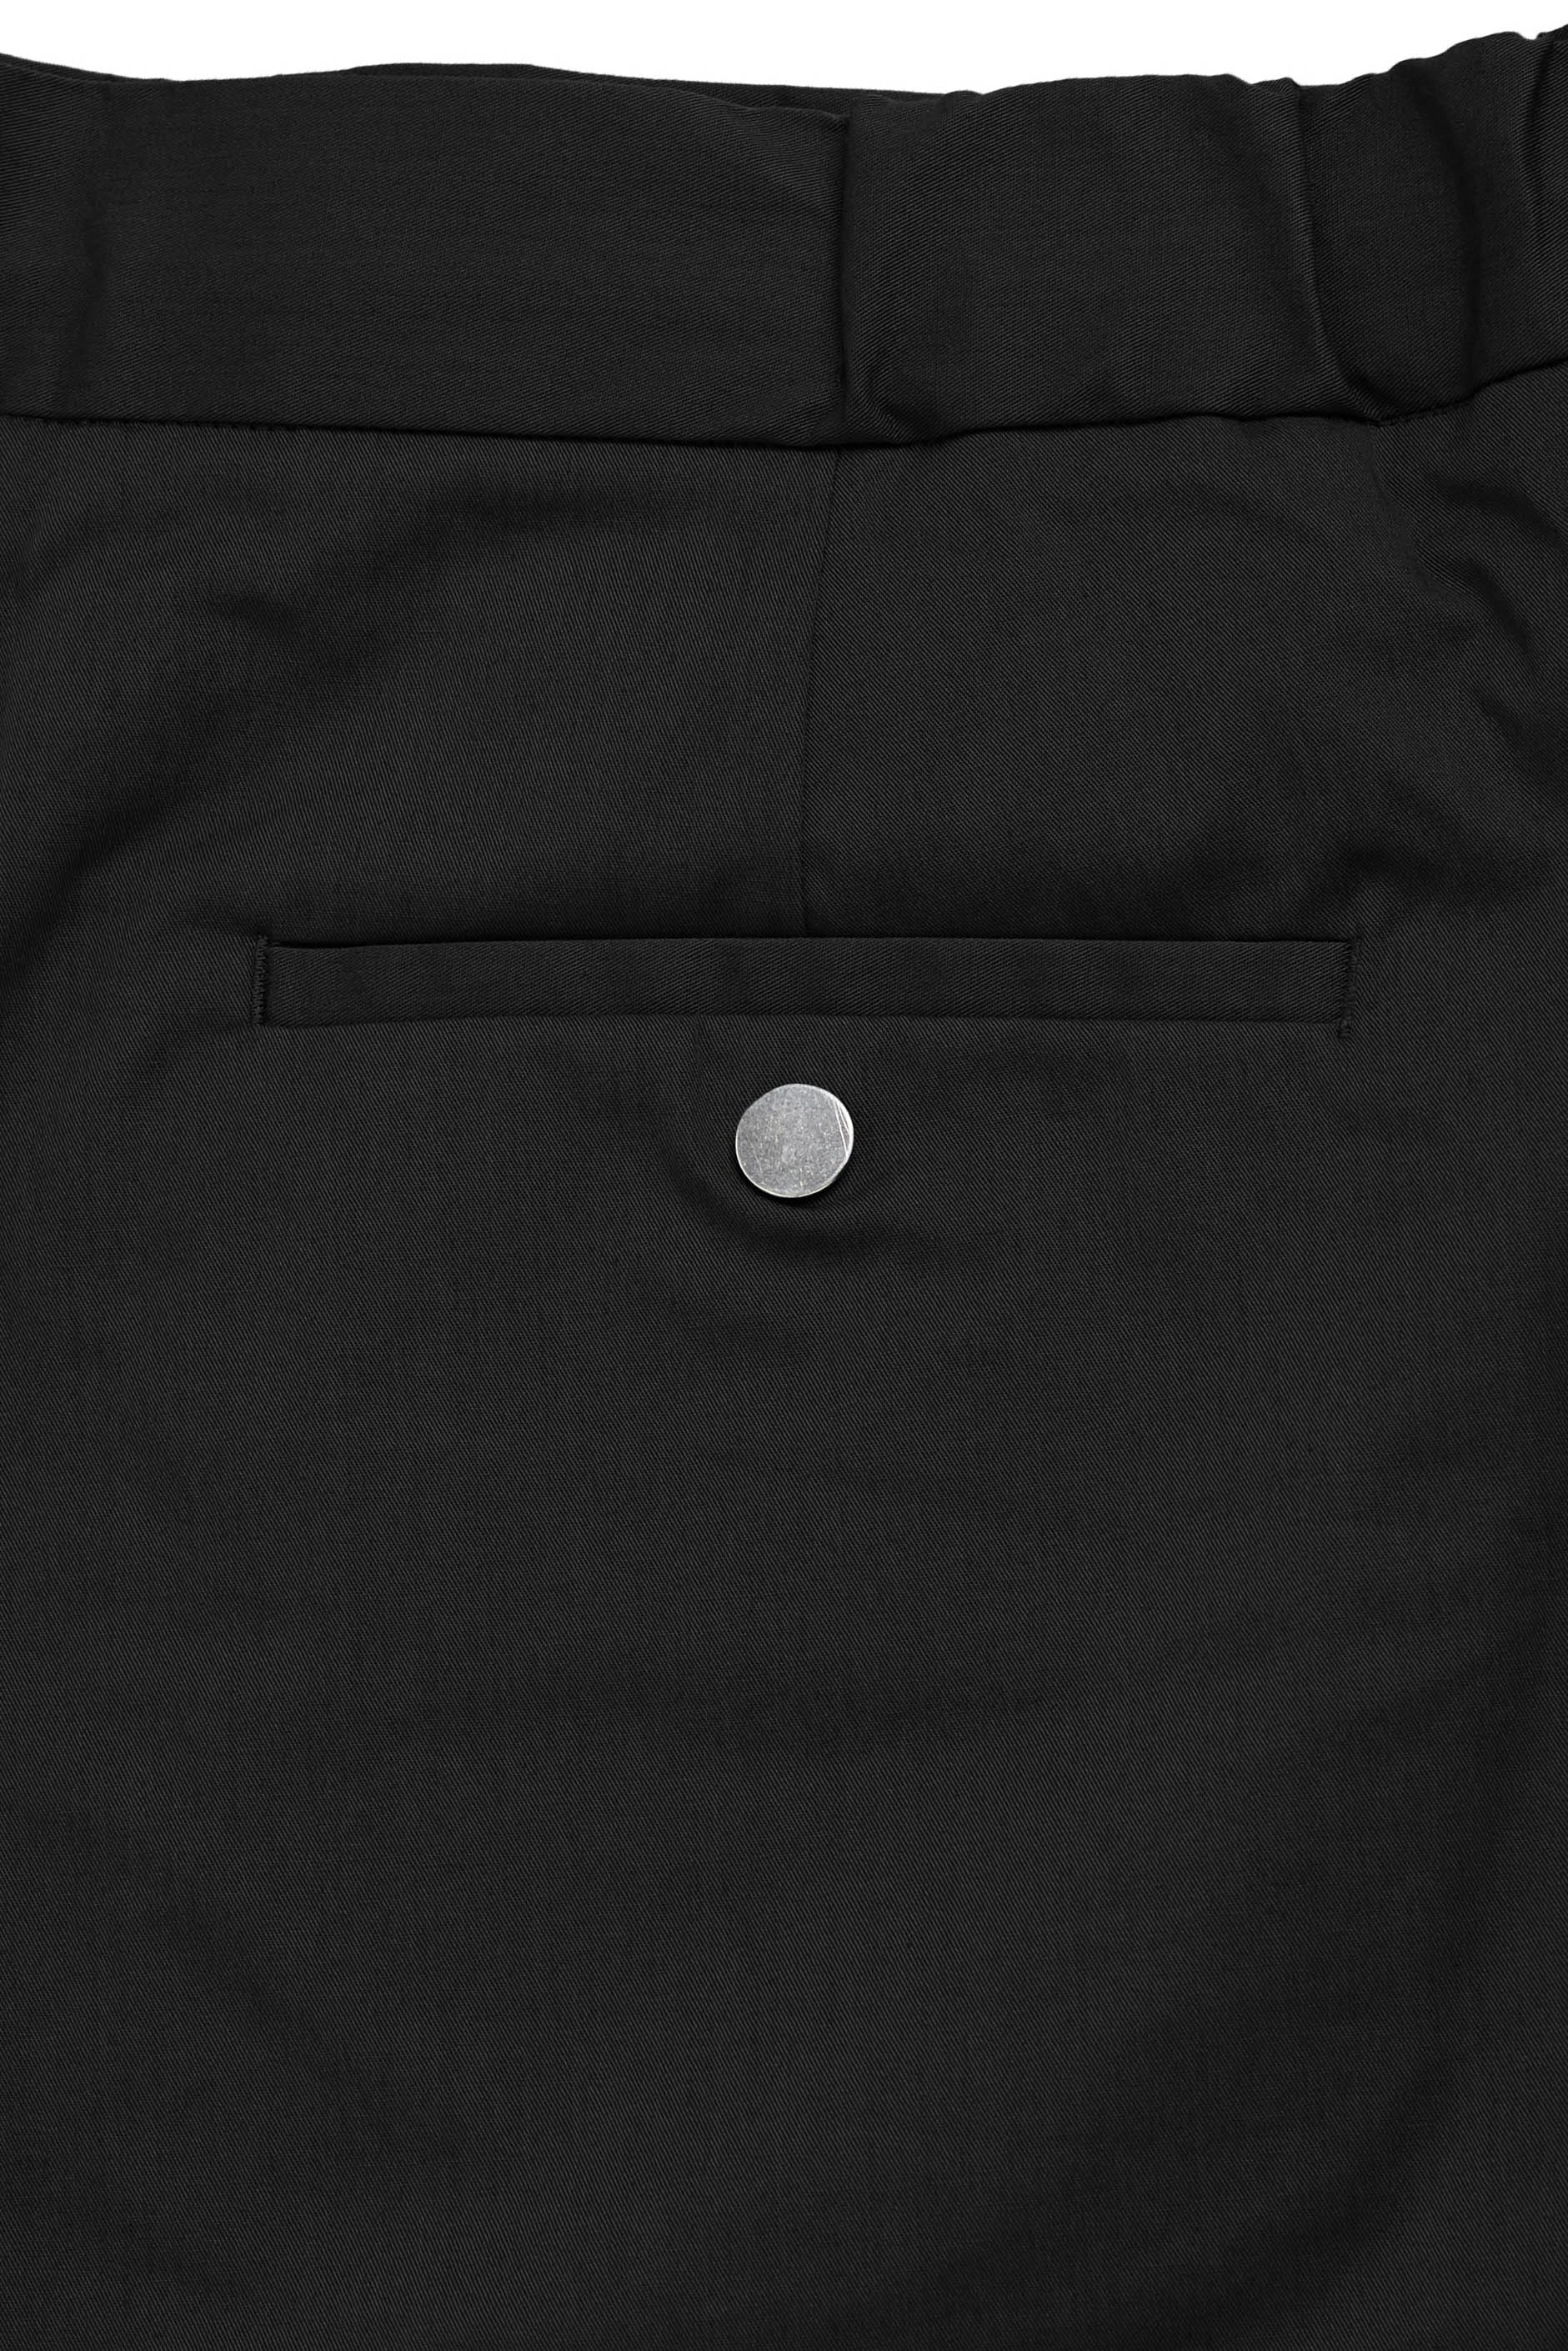 The 12 Shorts 7" || Black | Stretch Cotton